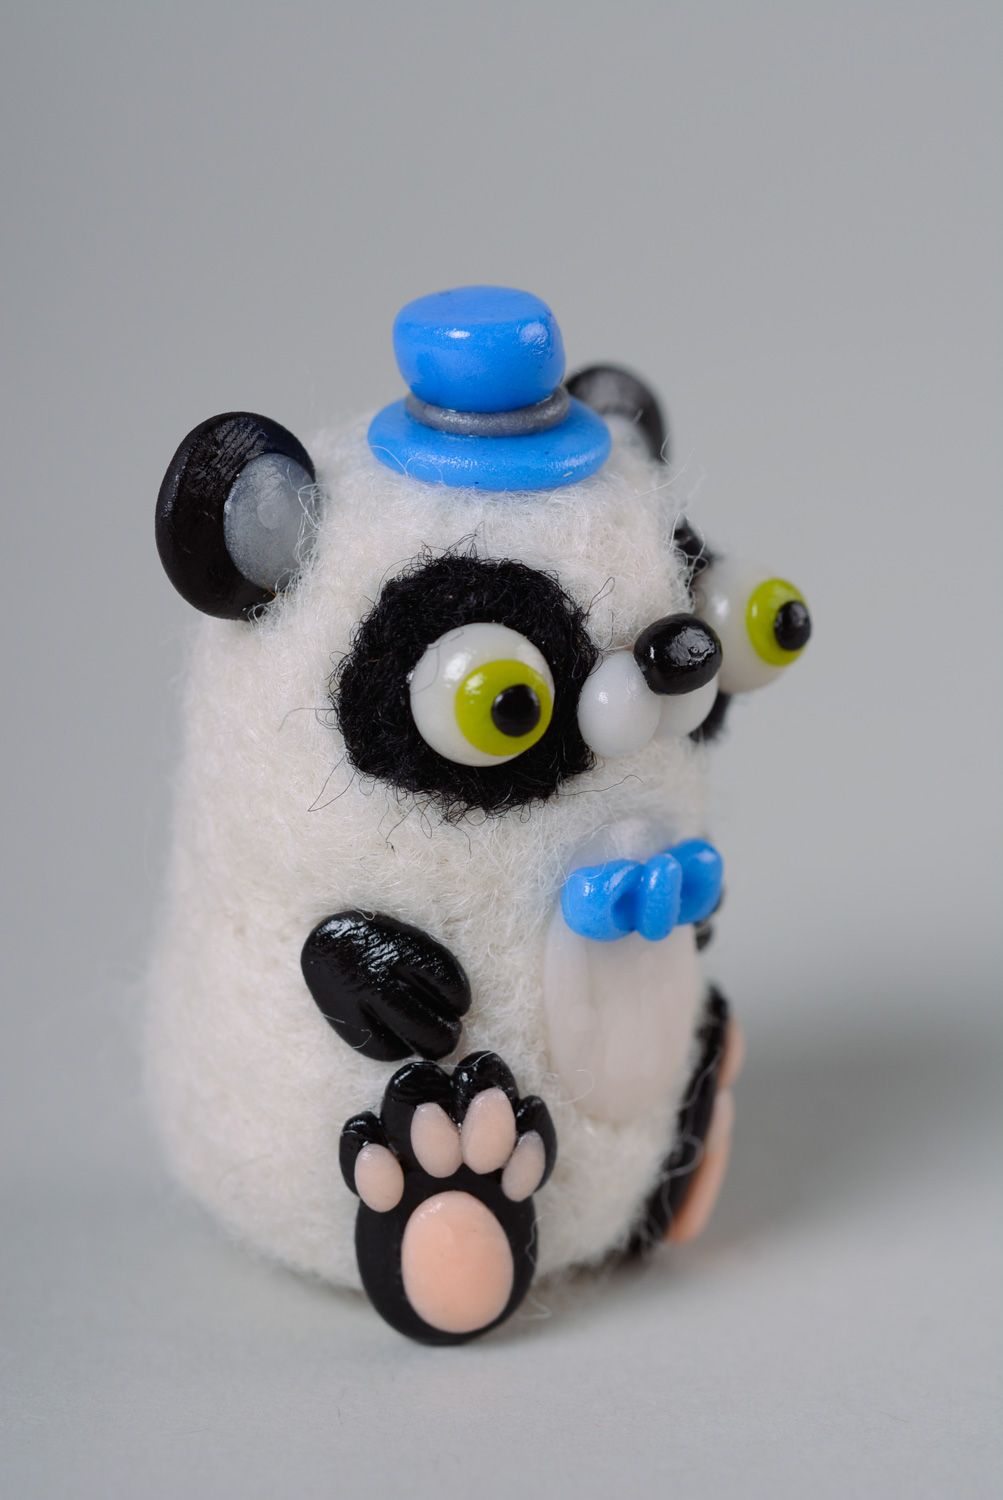 Handmade miniatur Kuscheltier Panda aus Wolle in Trockenfilzen Technik foto 2